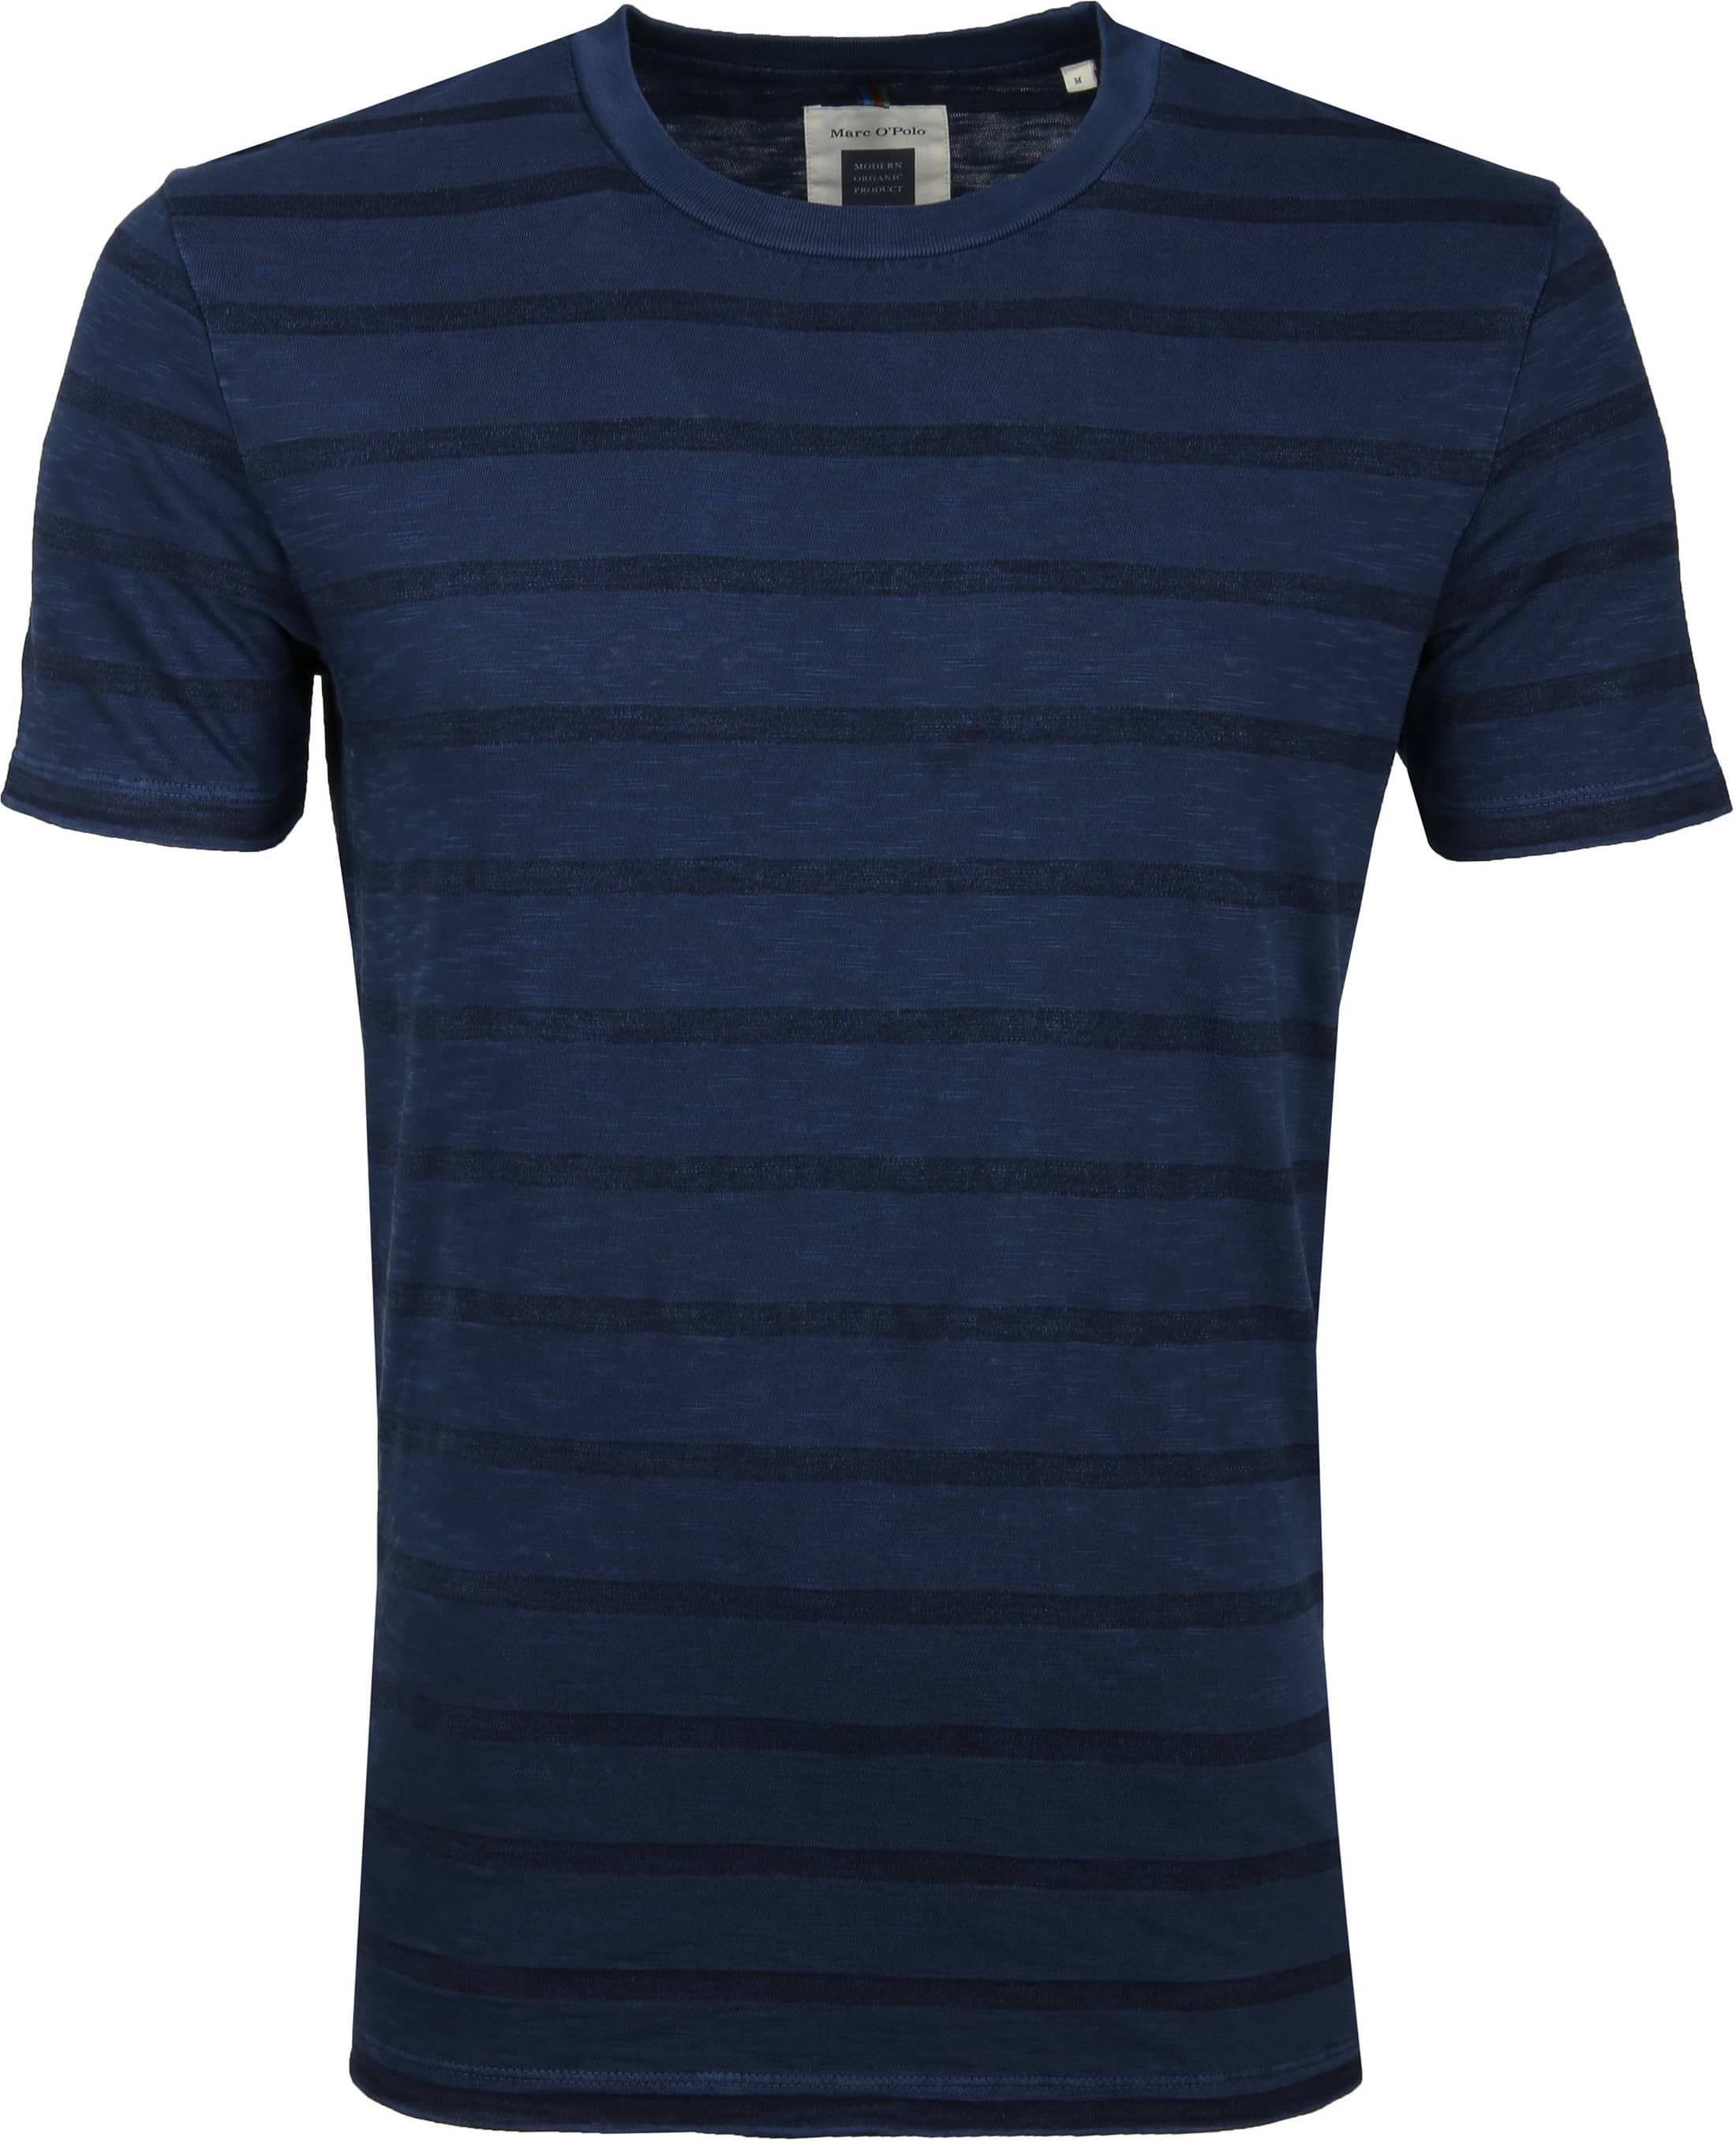 Marc O'Polo Logo T-shirt Stripe Navy Dark Blue size XL